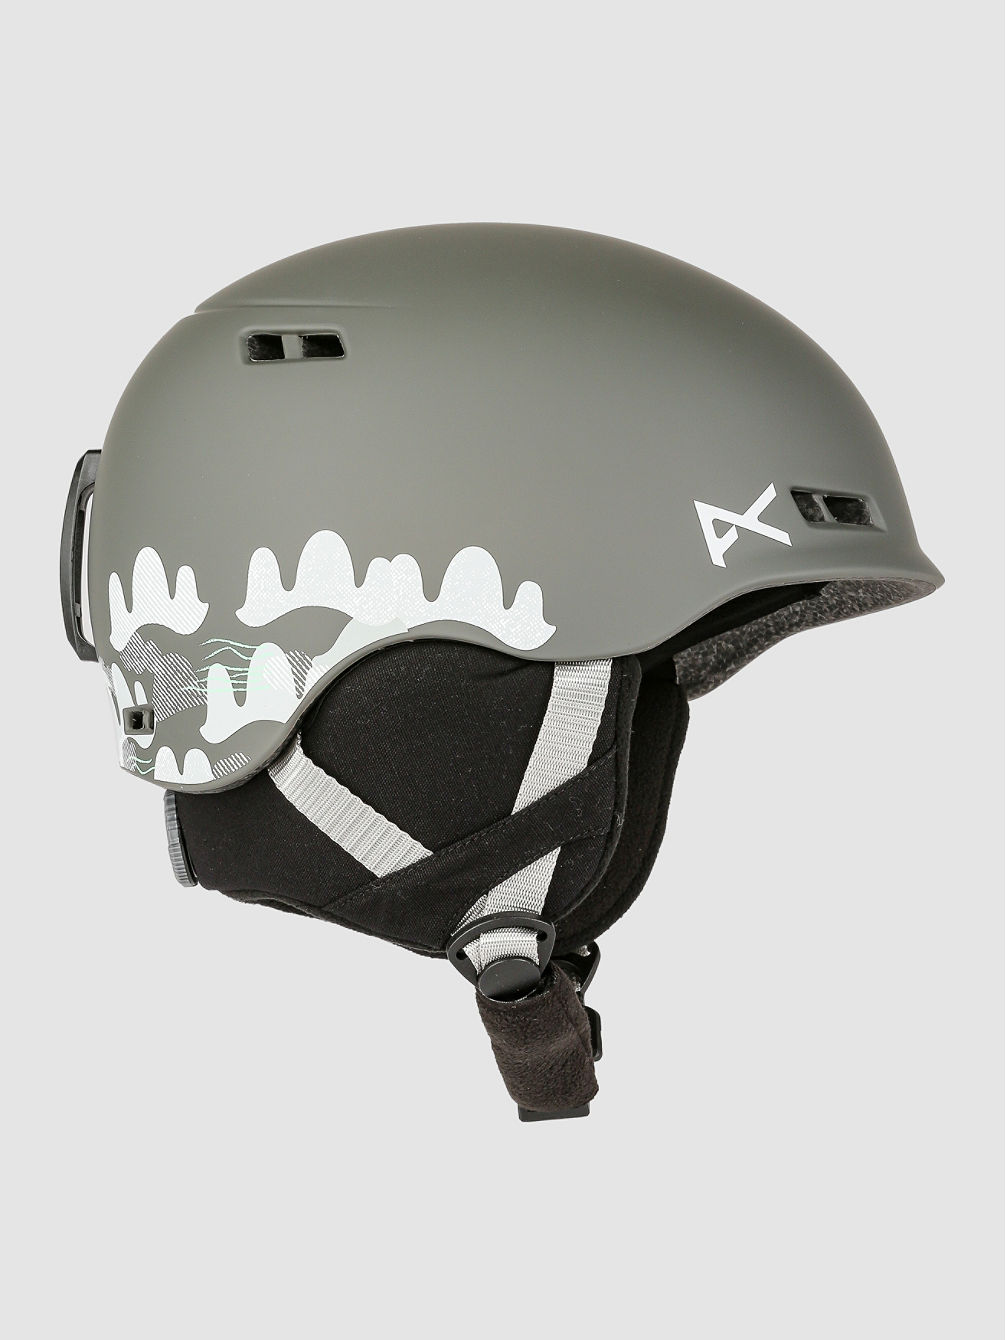 Burner Helm